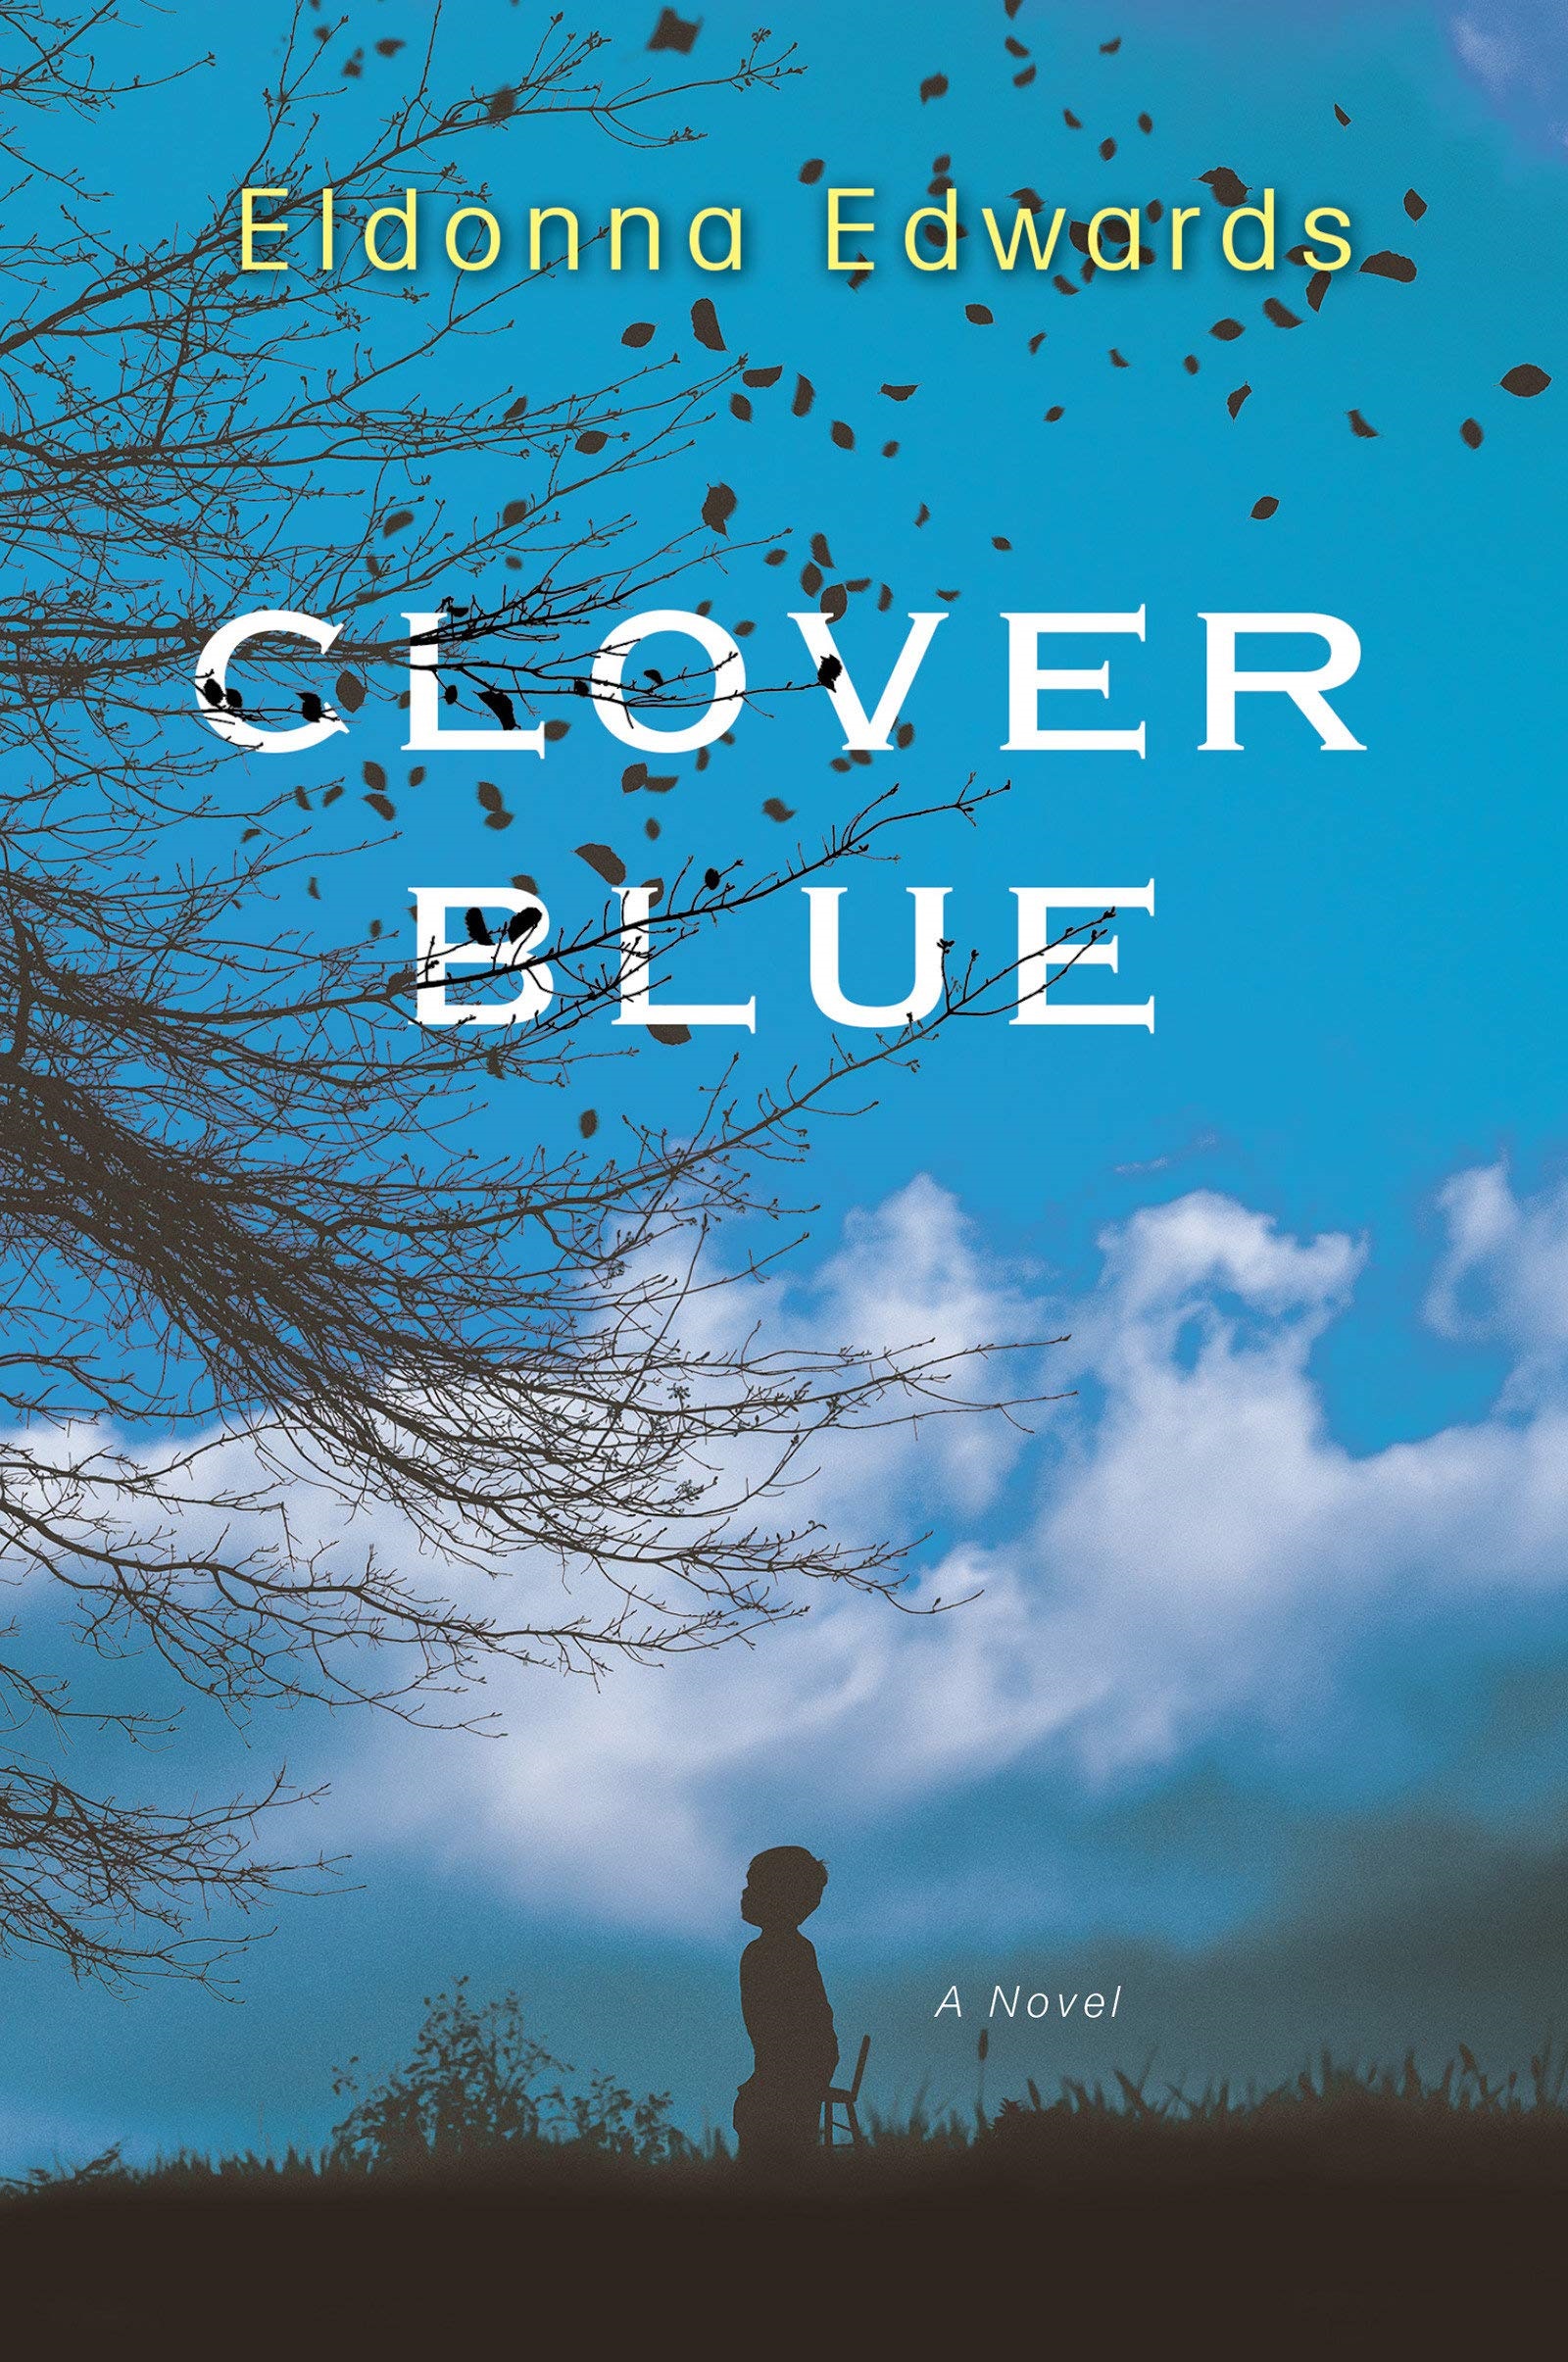 Book cover, Clover Blue by Eldonna Edwards.